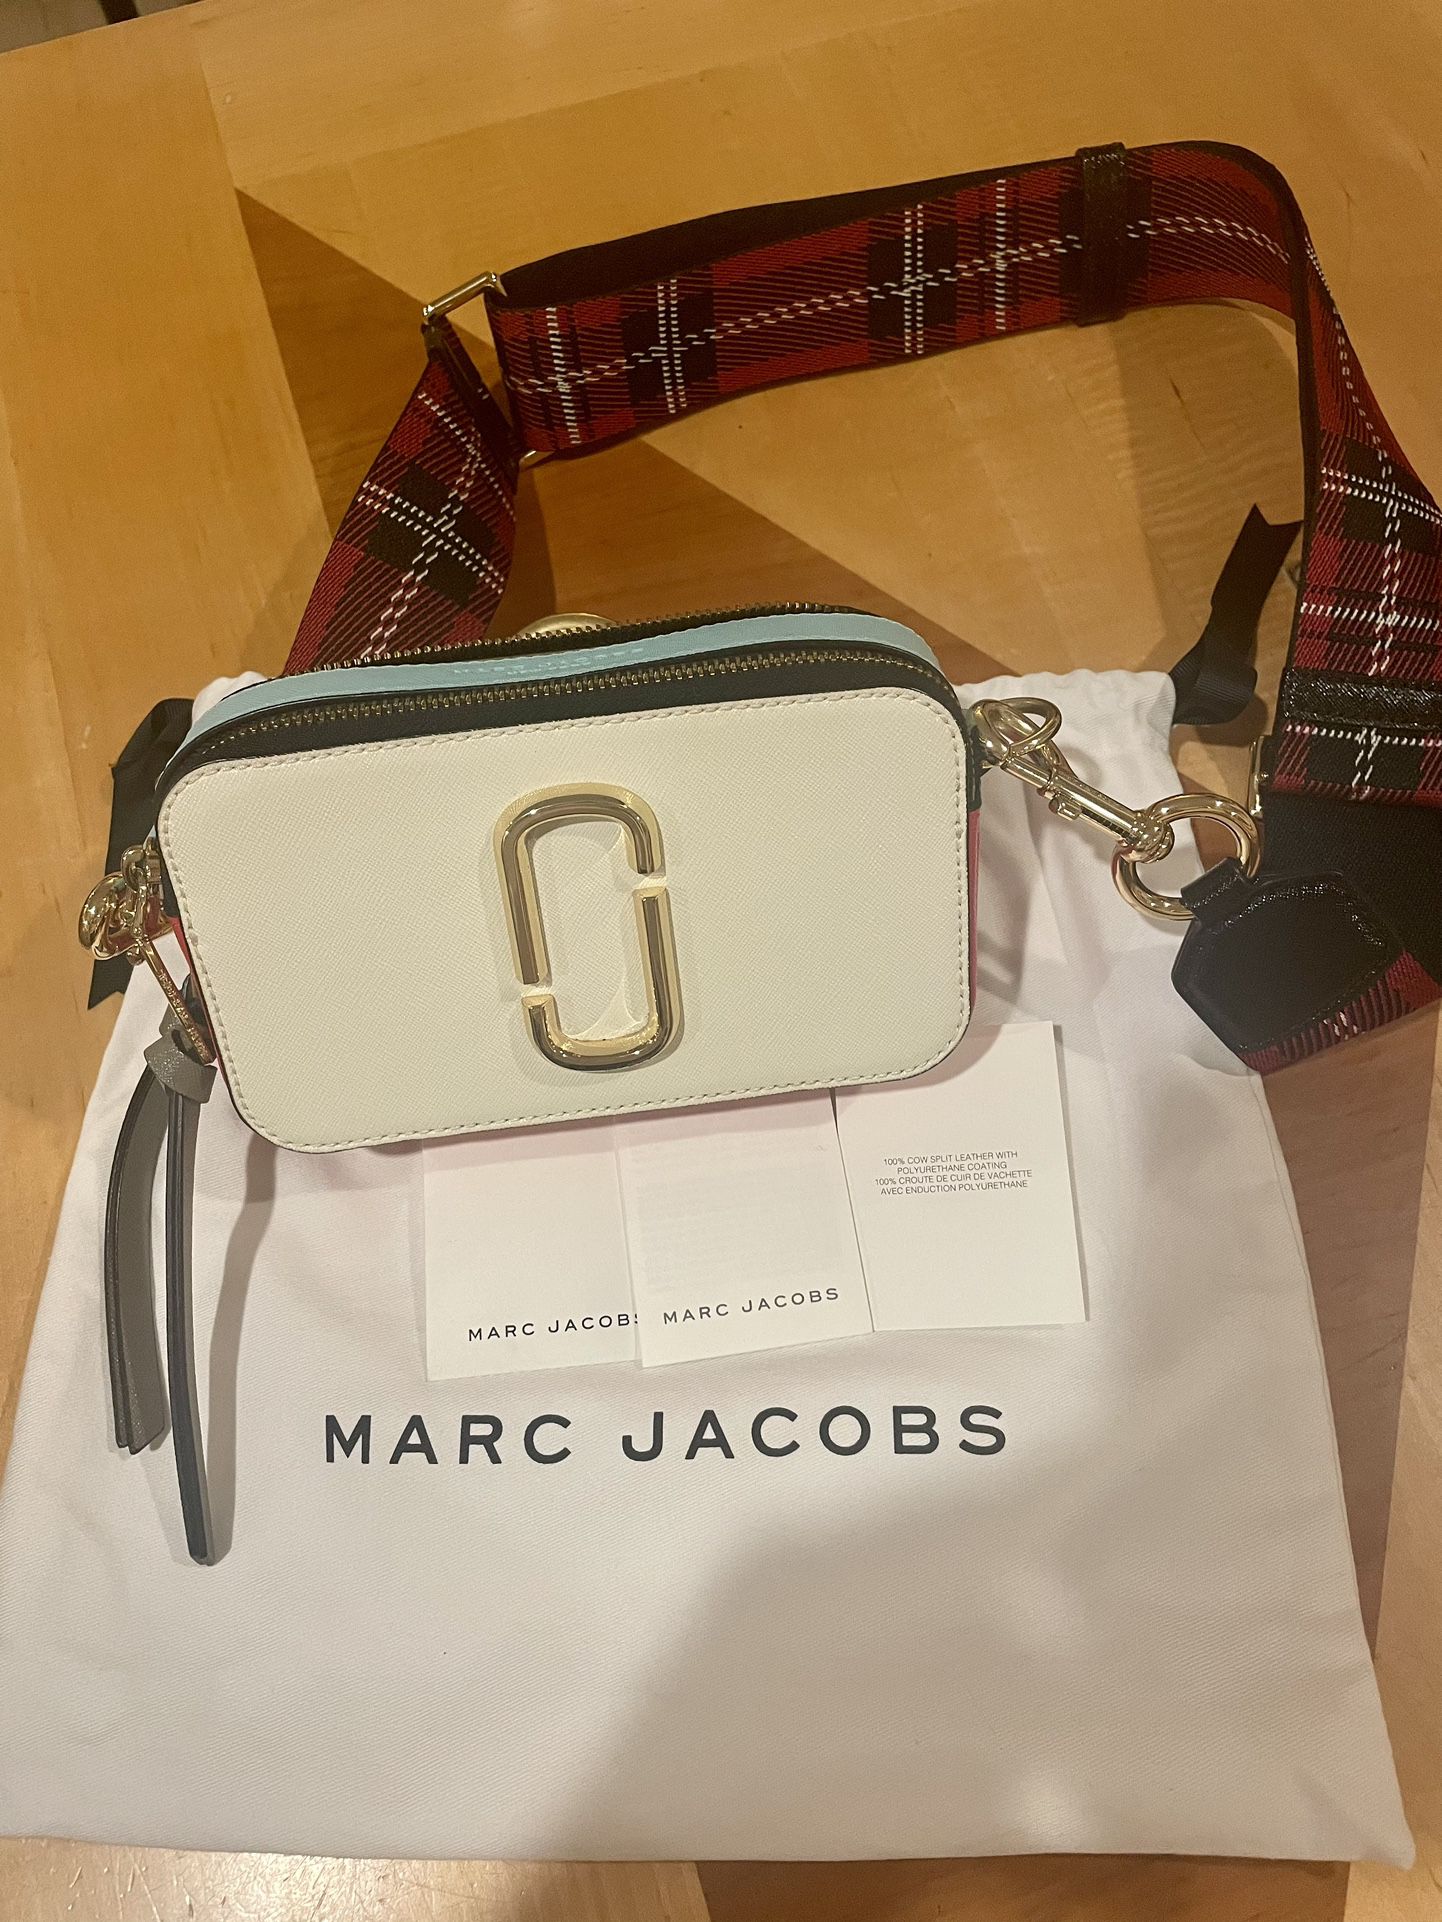 Marc Jacobs The Snapshot Camera Bag